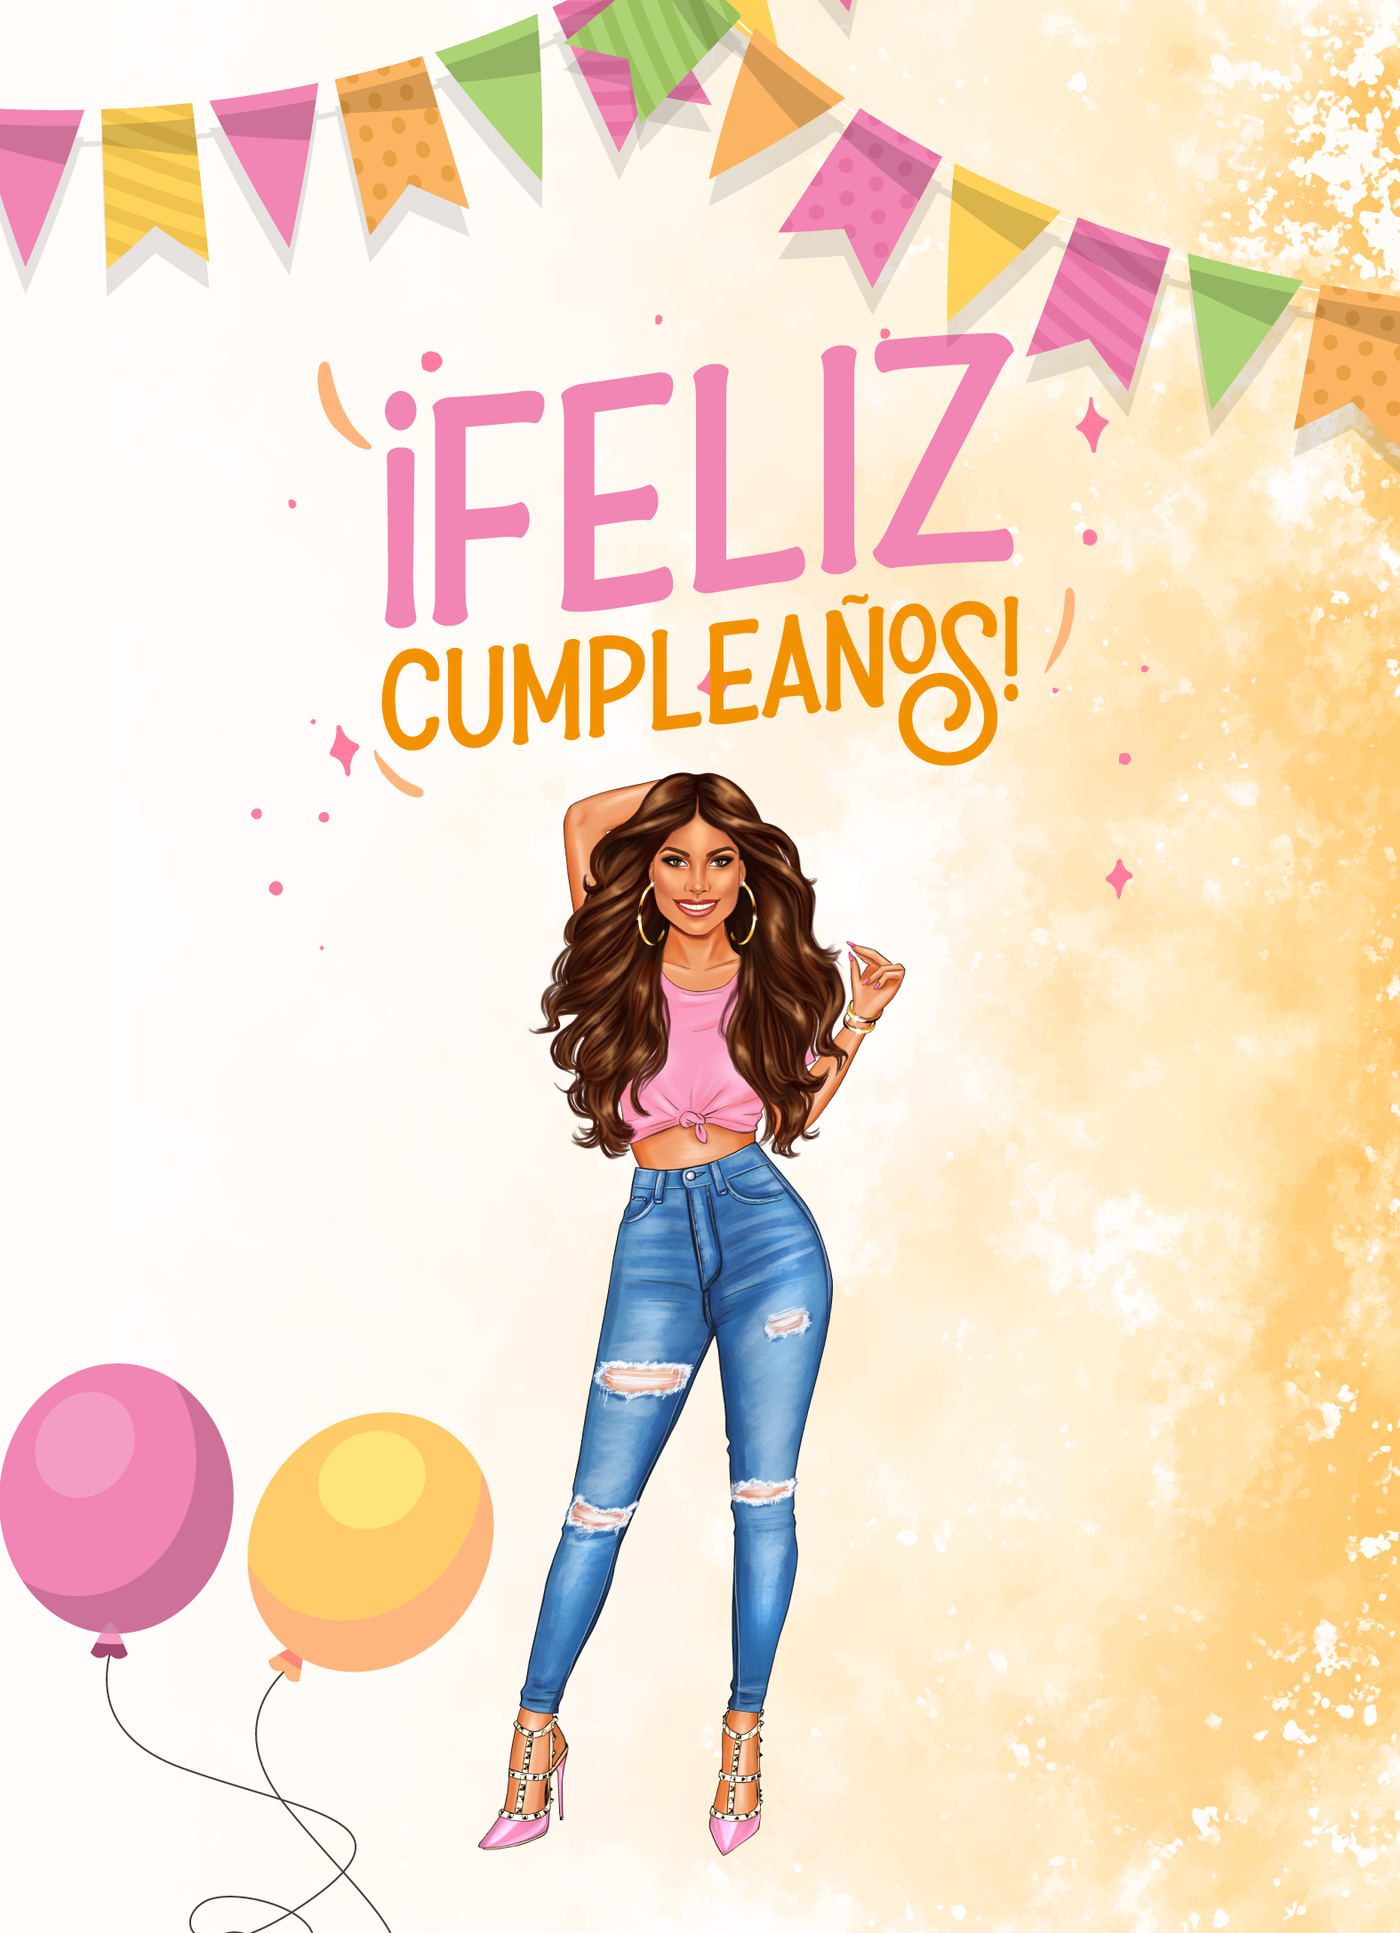 Lettering Feliz Cumpleanos in Spanish which means Happy Birthday